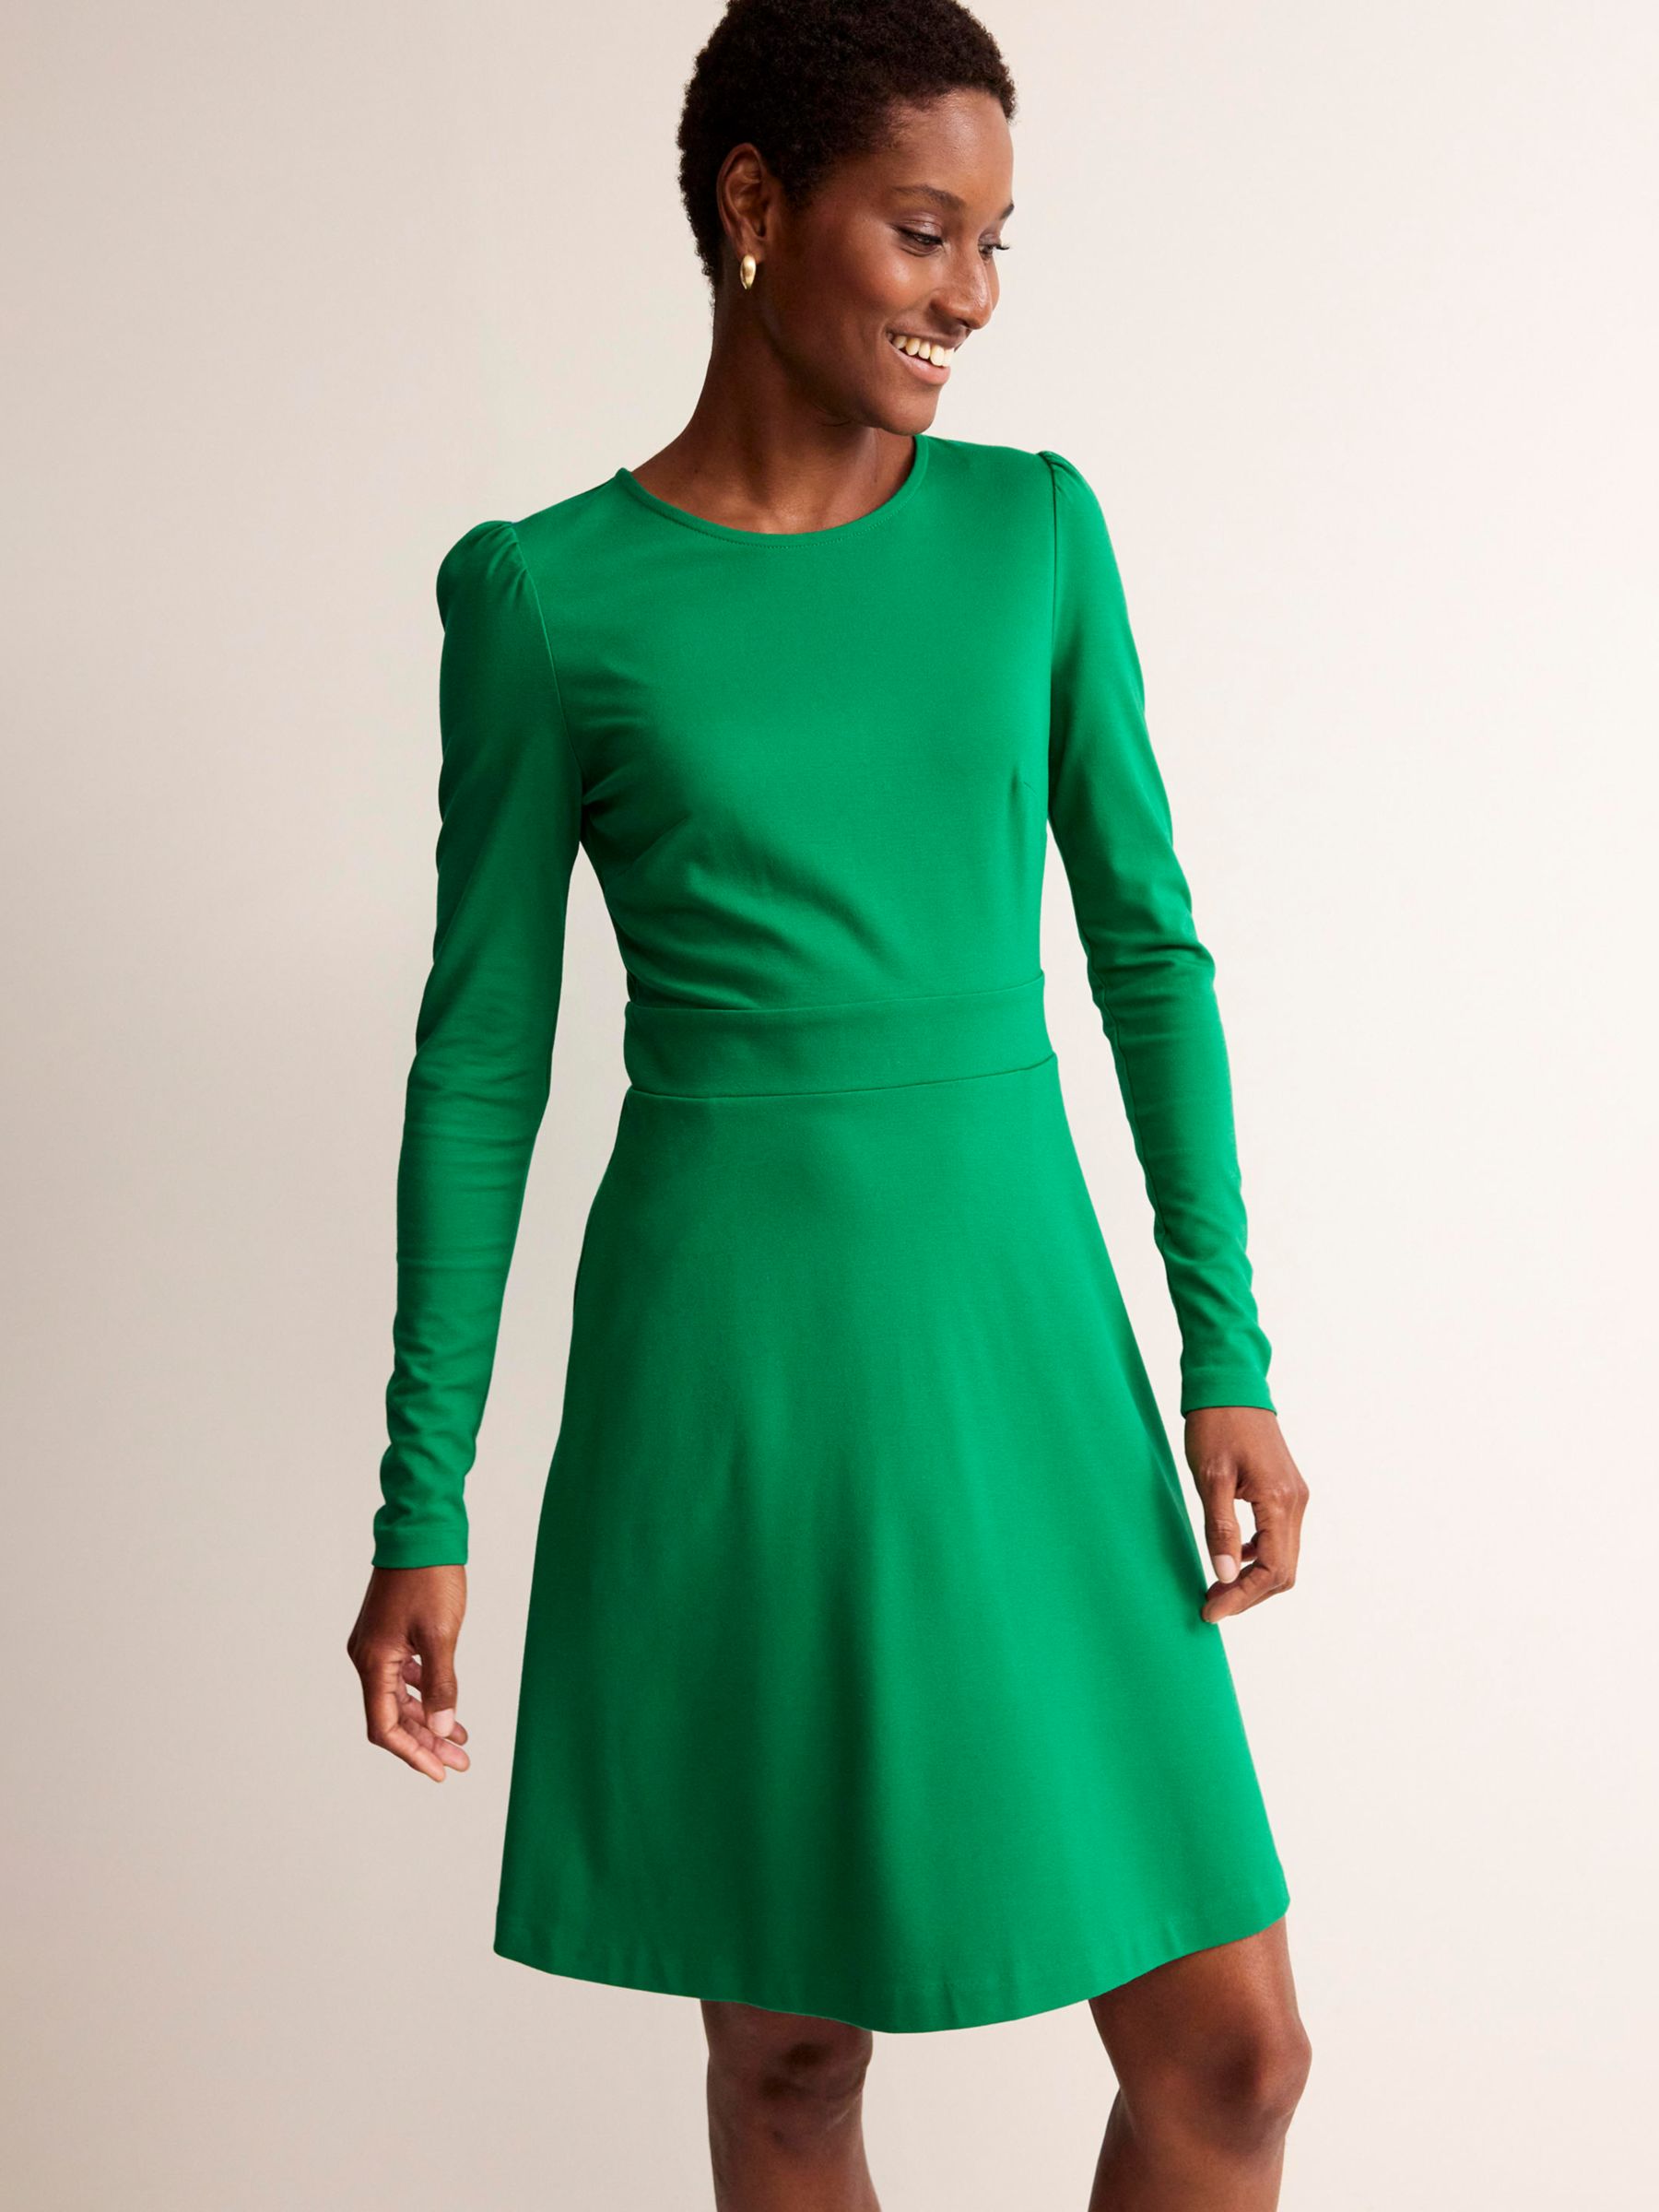 Boden Sabrina Swing Jersey Dress, Veridian Green at John Lewis & Partners